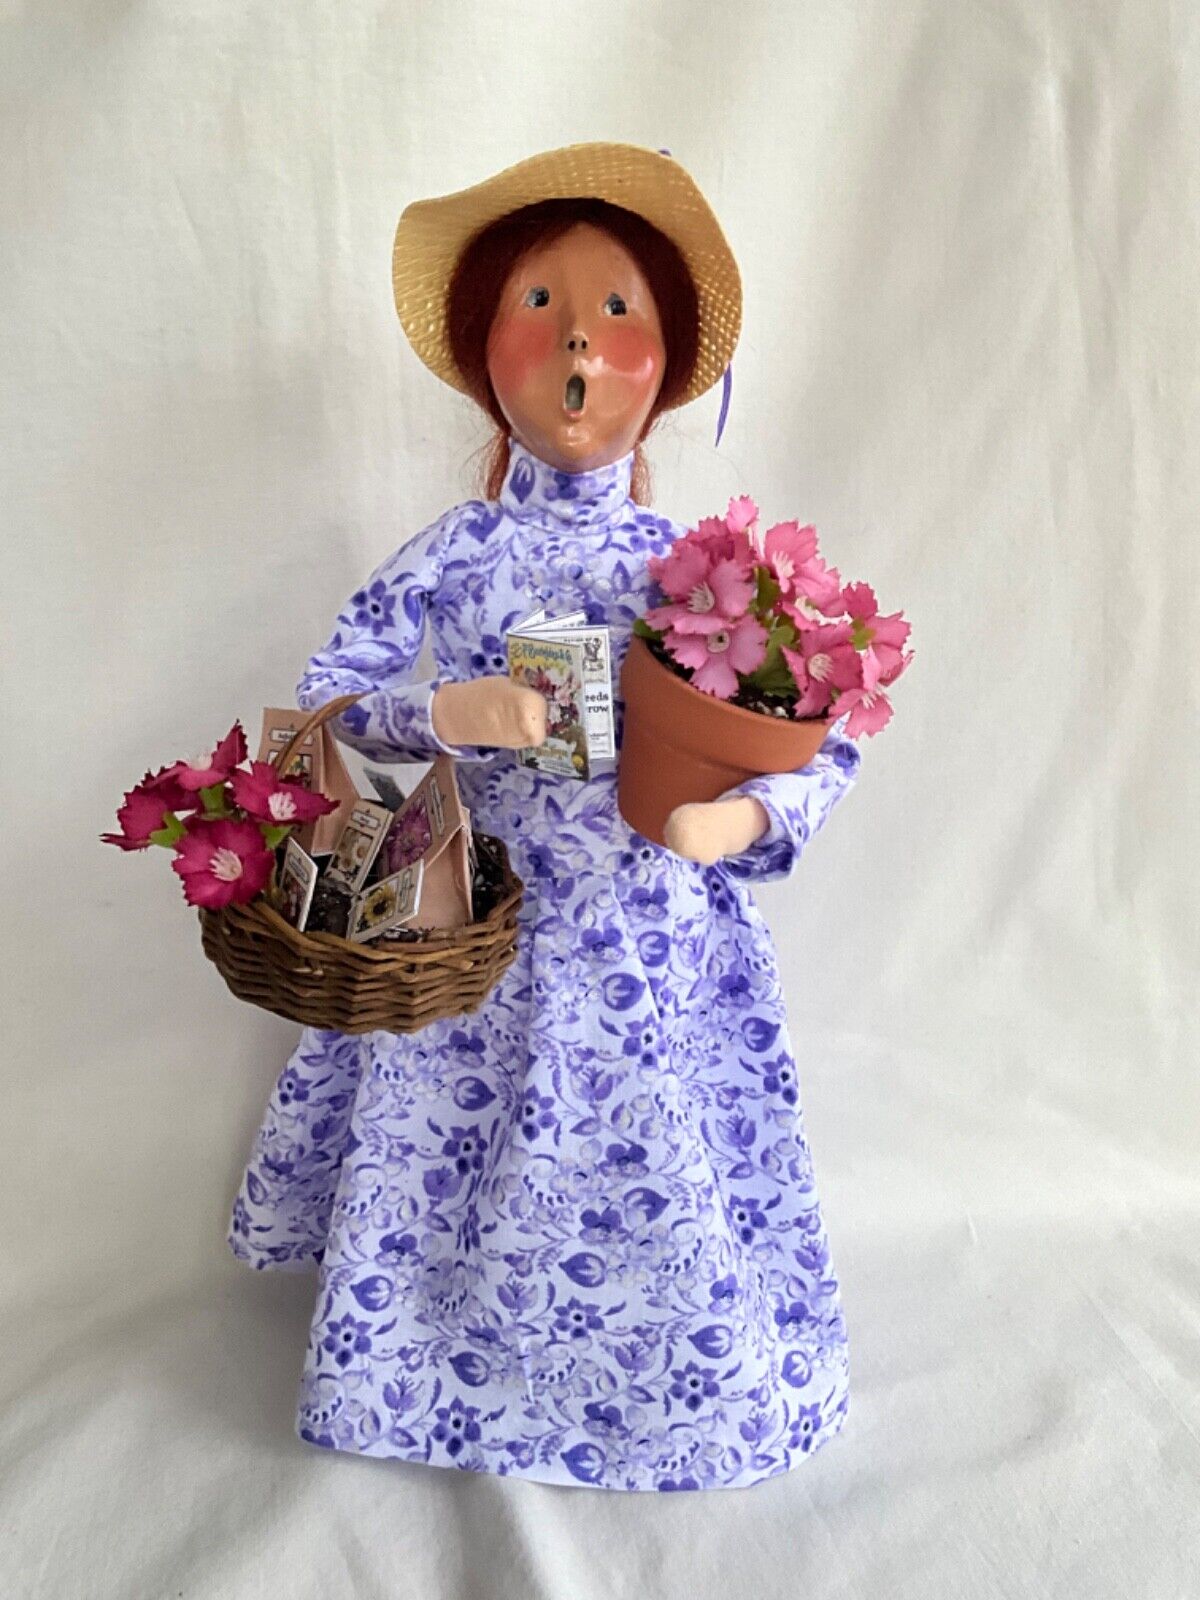 Byers Choice Spring Gardening Gardener Woman Clay Pot Flower Catalog & Bulbs